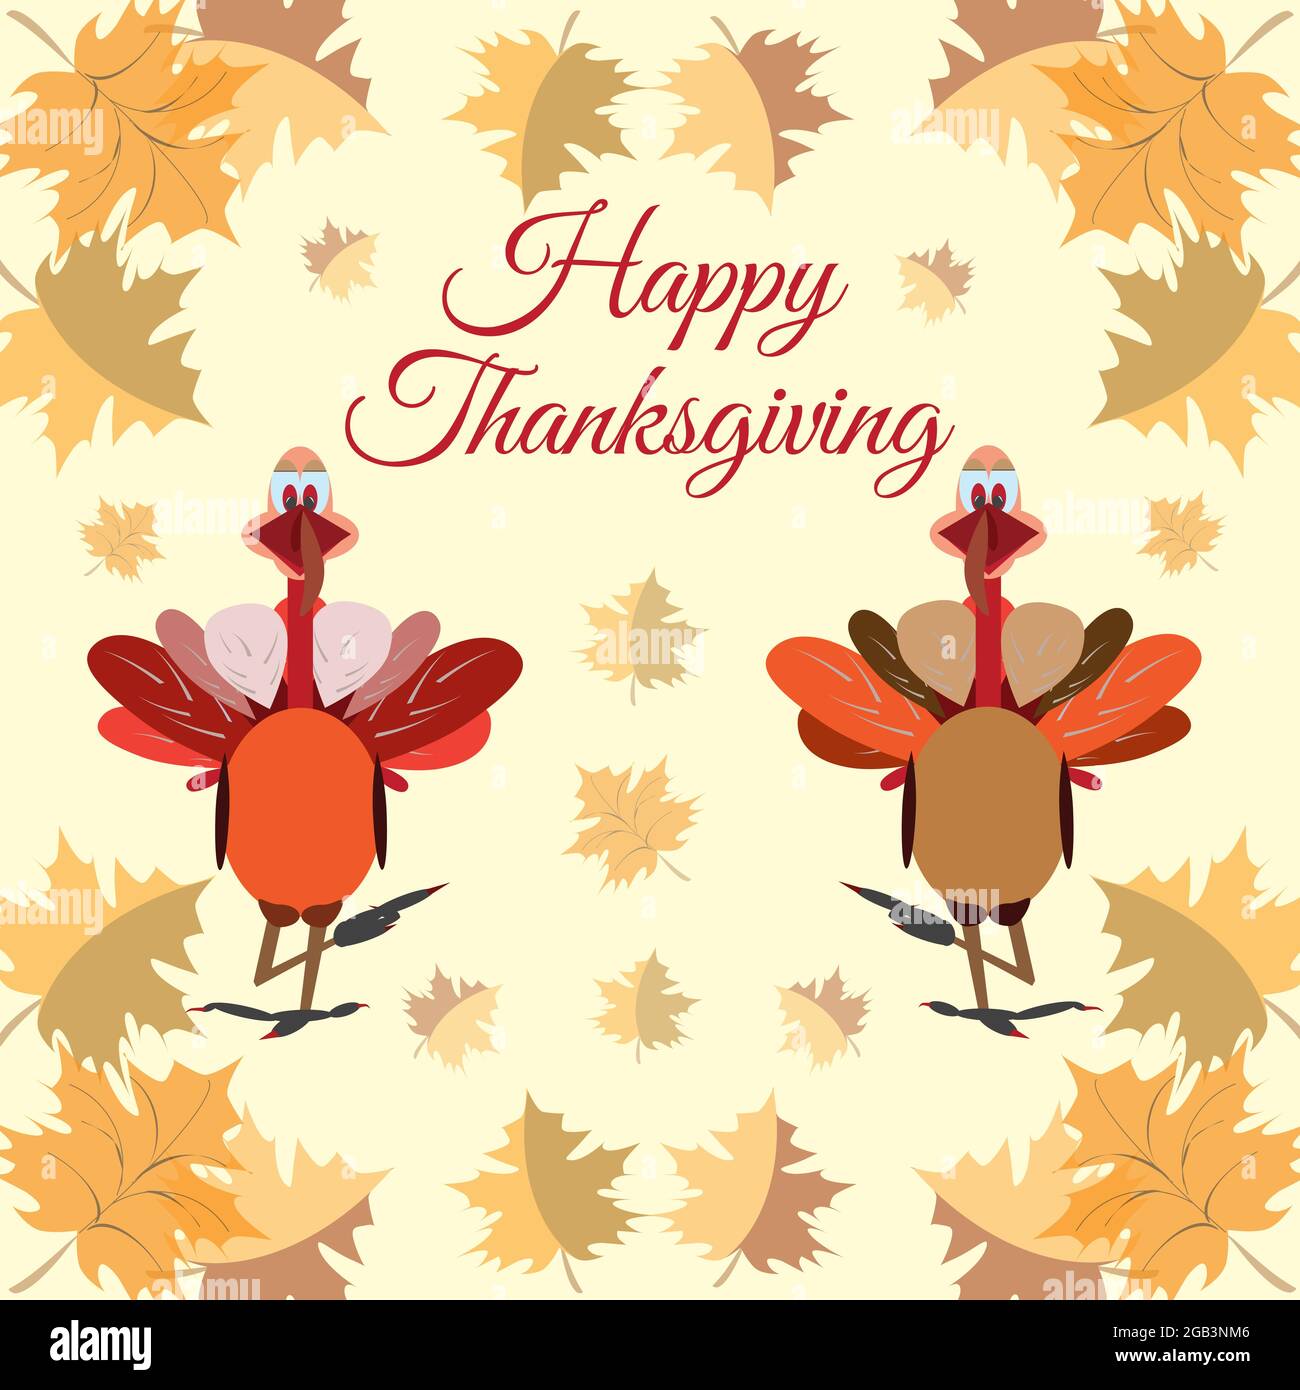 Cute Thanksgiving turkeys, maple leaves, vector illustration. Stock Vector